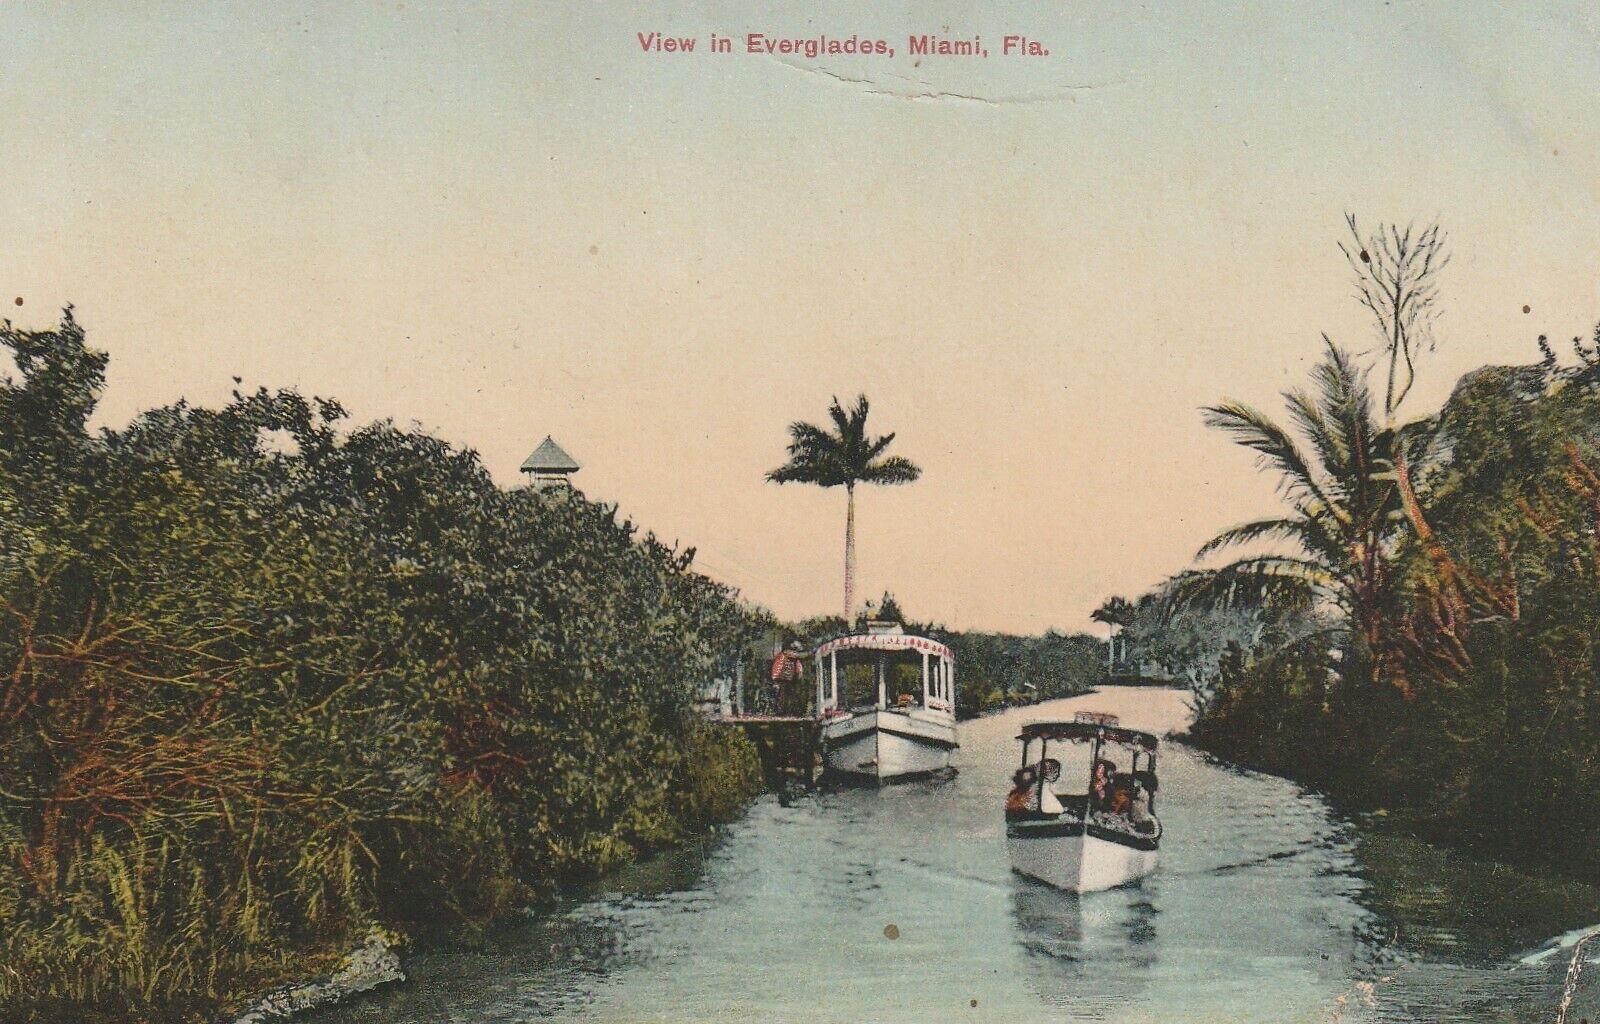 1911 View In Everglades, Miami Fla. Tour Boats a197